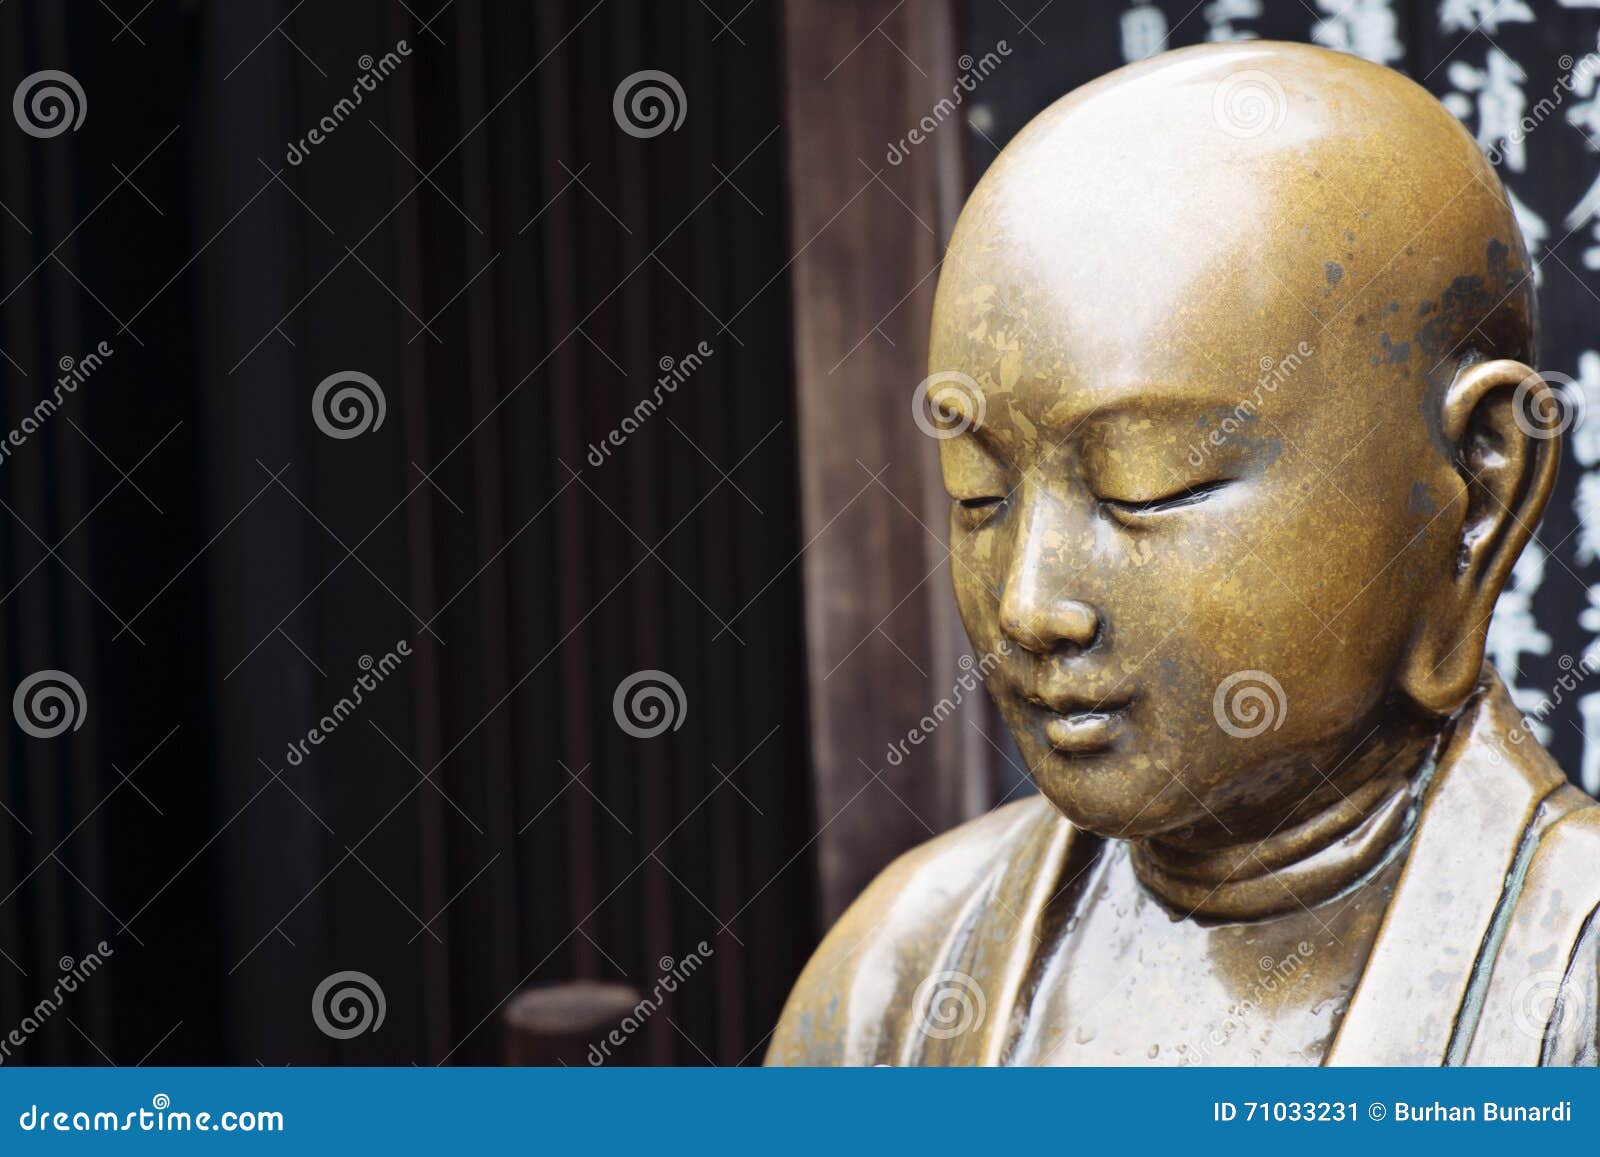 buddhism sculpture